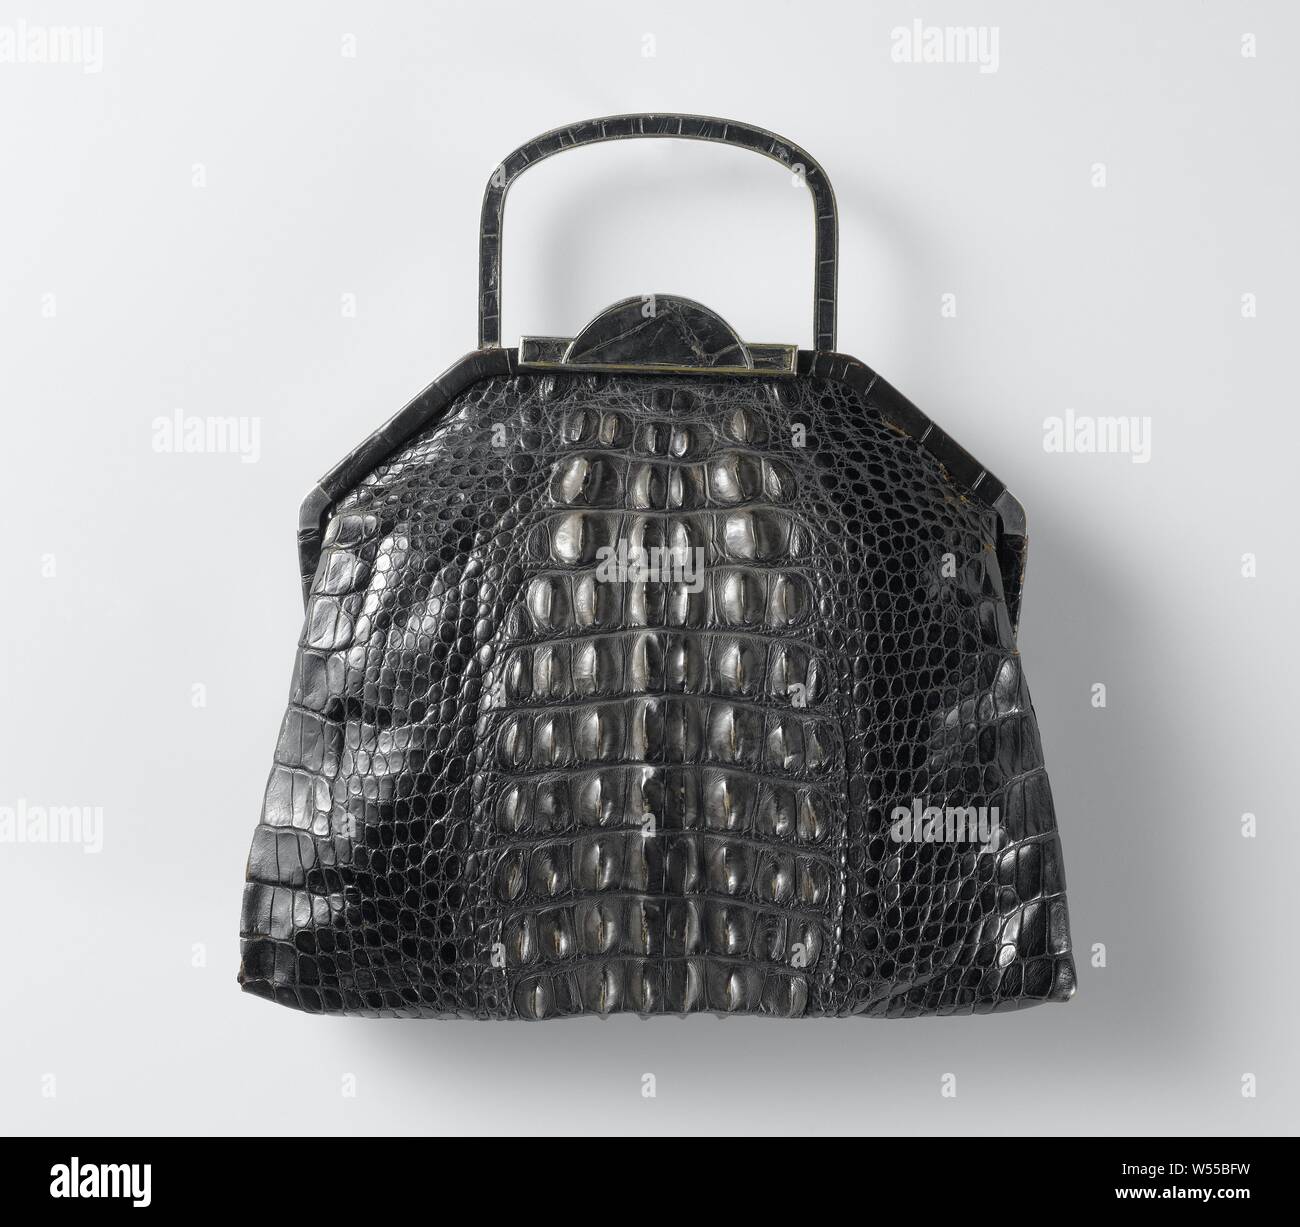 1940s handbag purse brown leather alligator texture frame bag